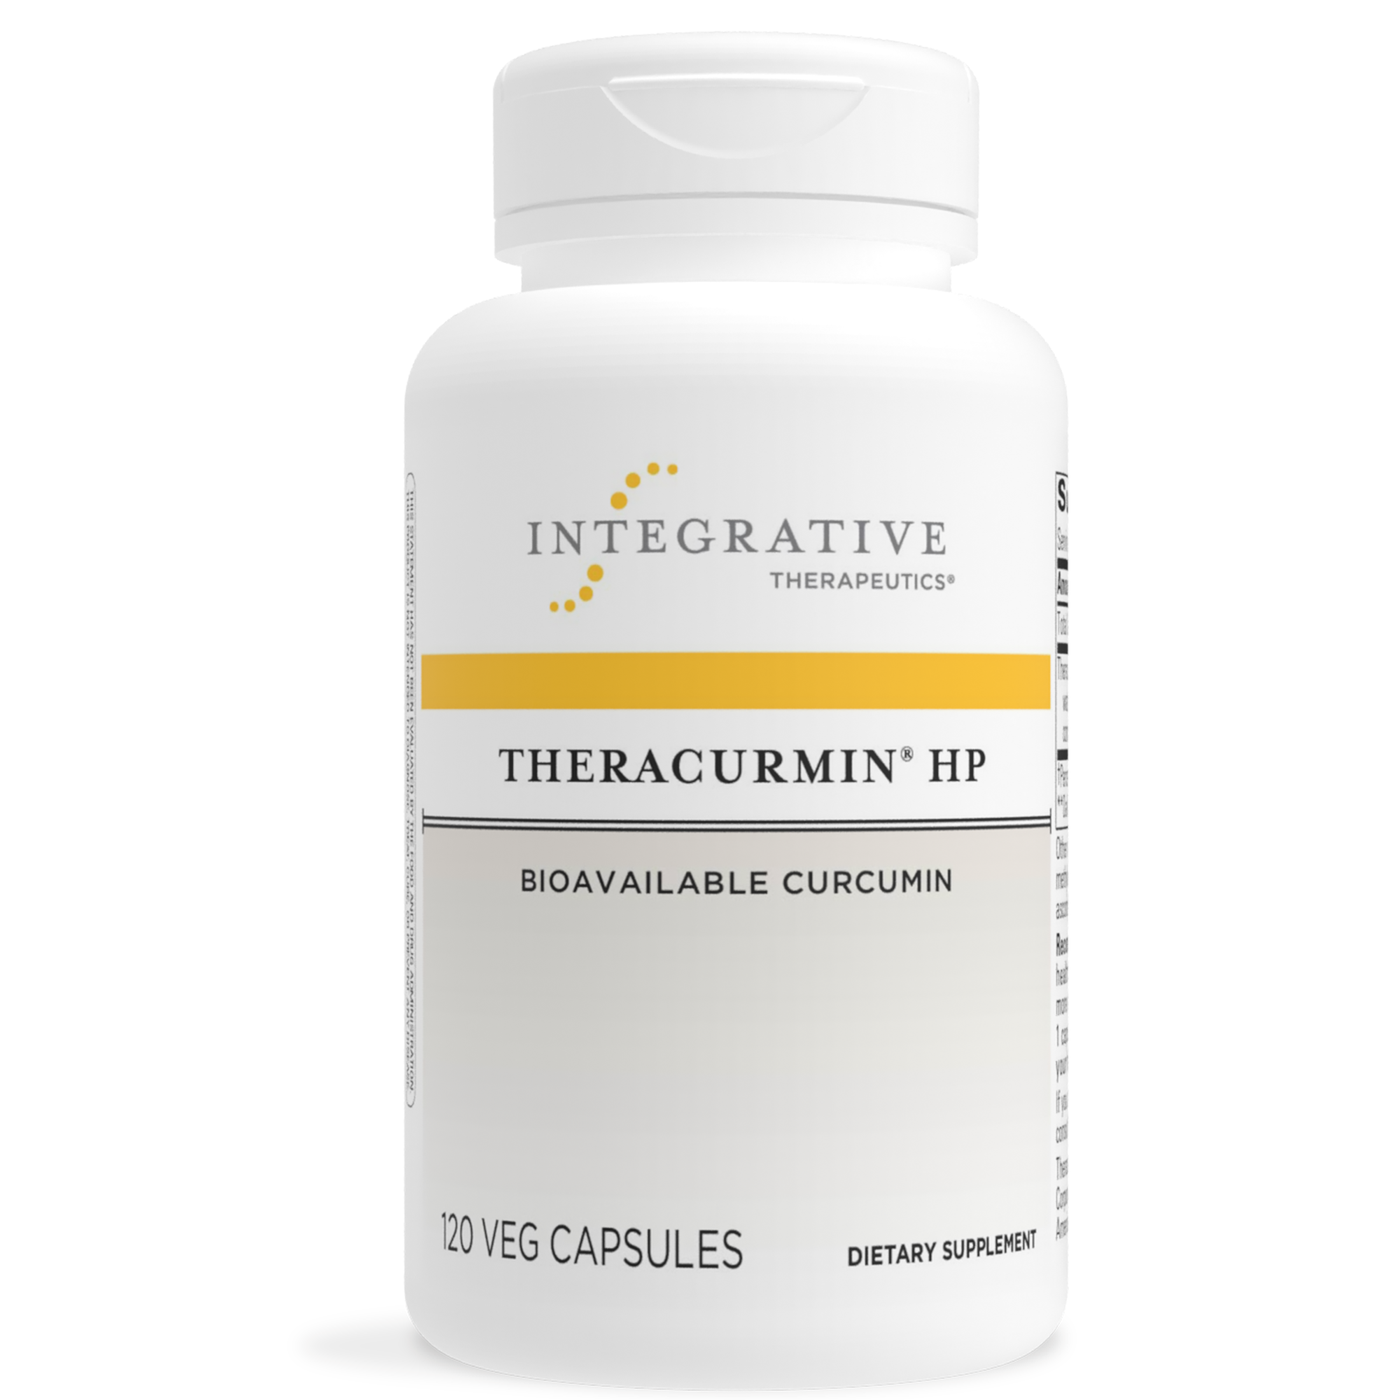 Theracurmin HP 120 vegcaps Curated Wellness